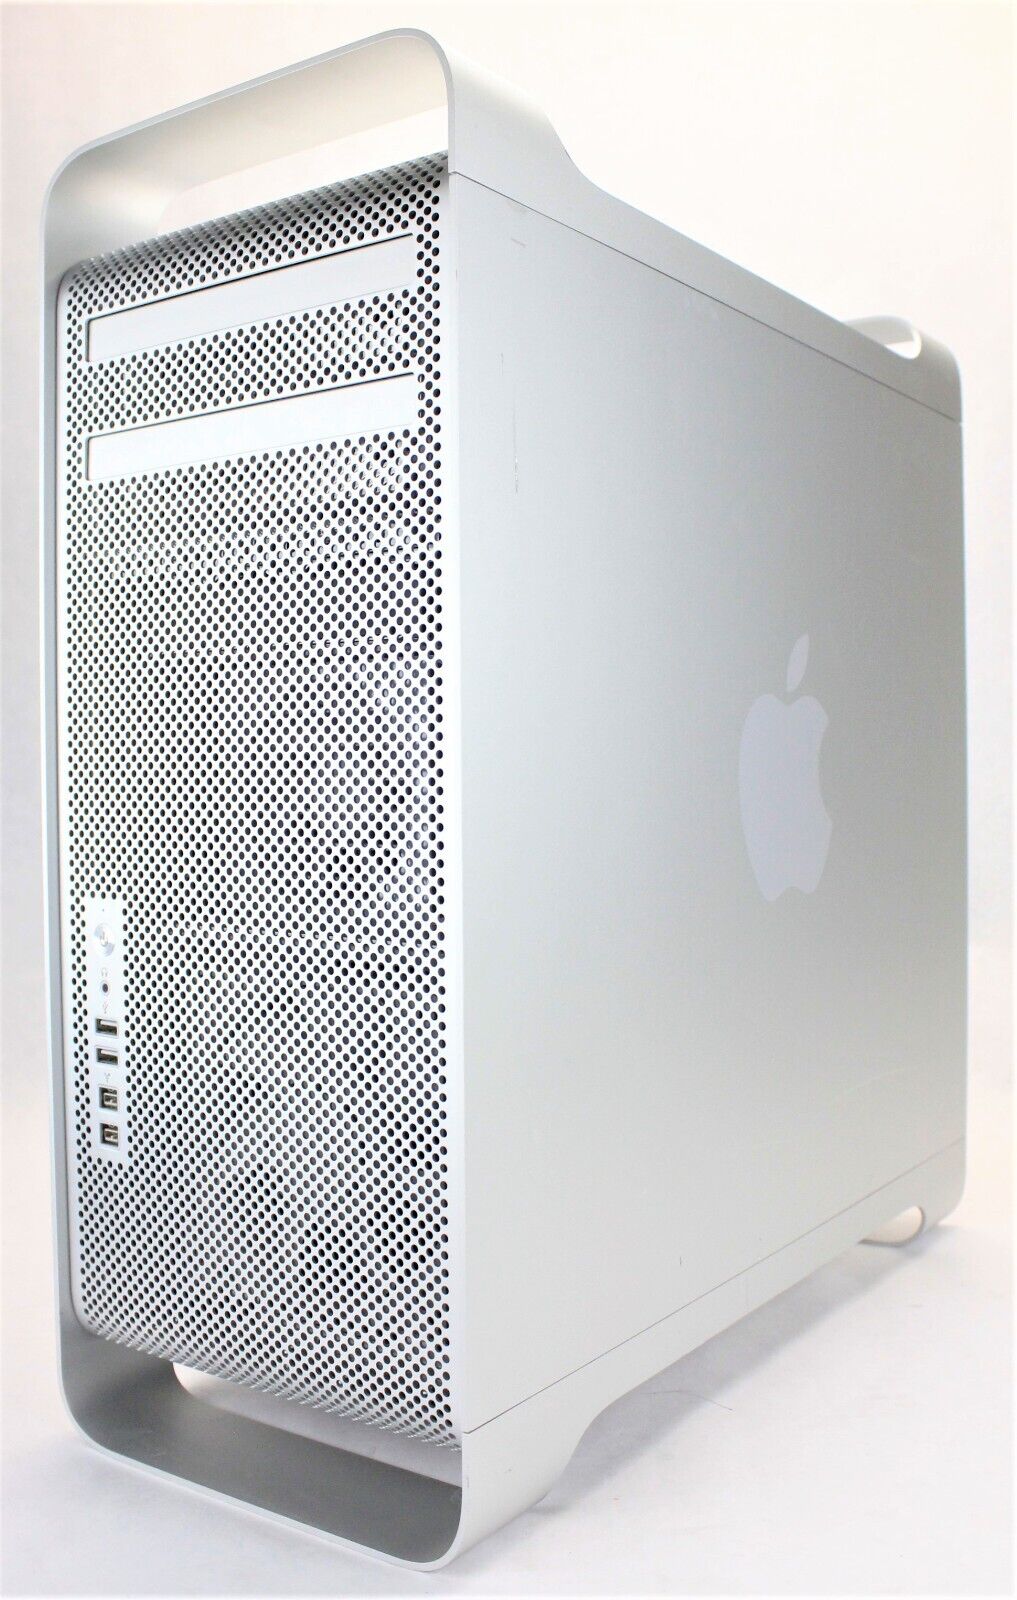 Apple Mac Pro 2009 4-Core Xeon 2.66GHz 8GB Ram 1TB HDD - GT 120 El Capitan